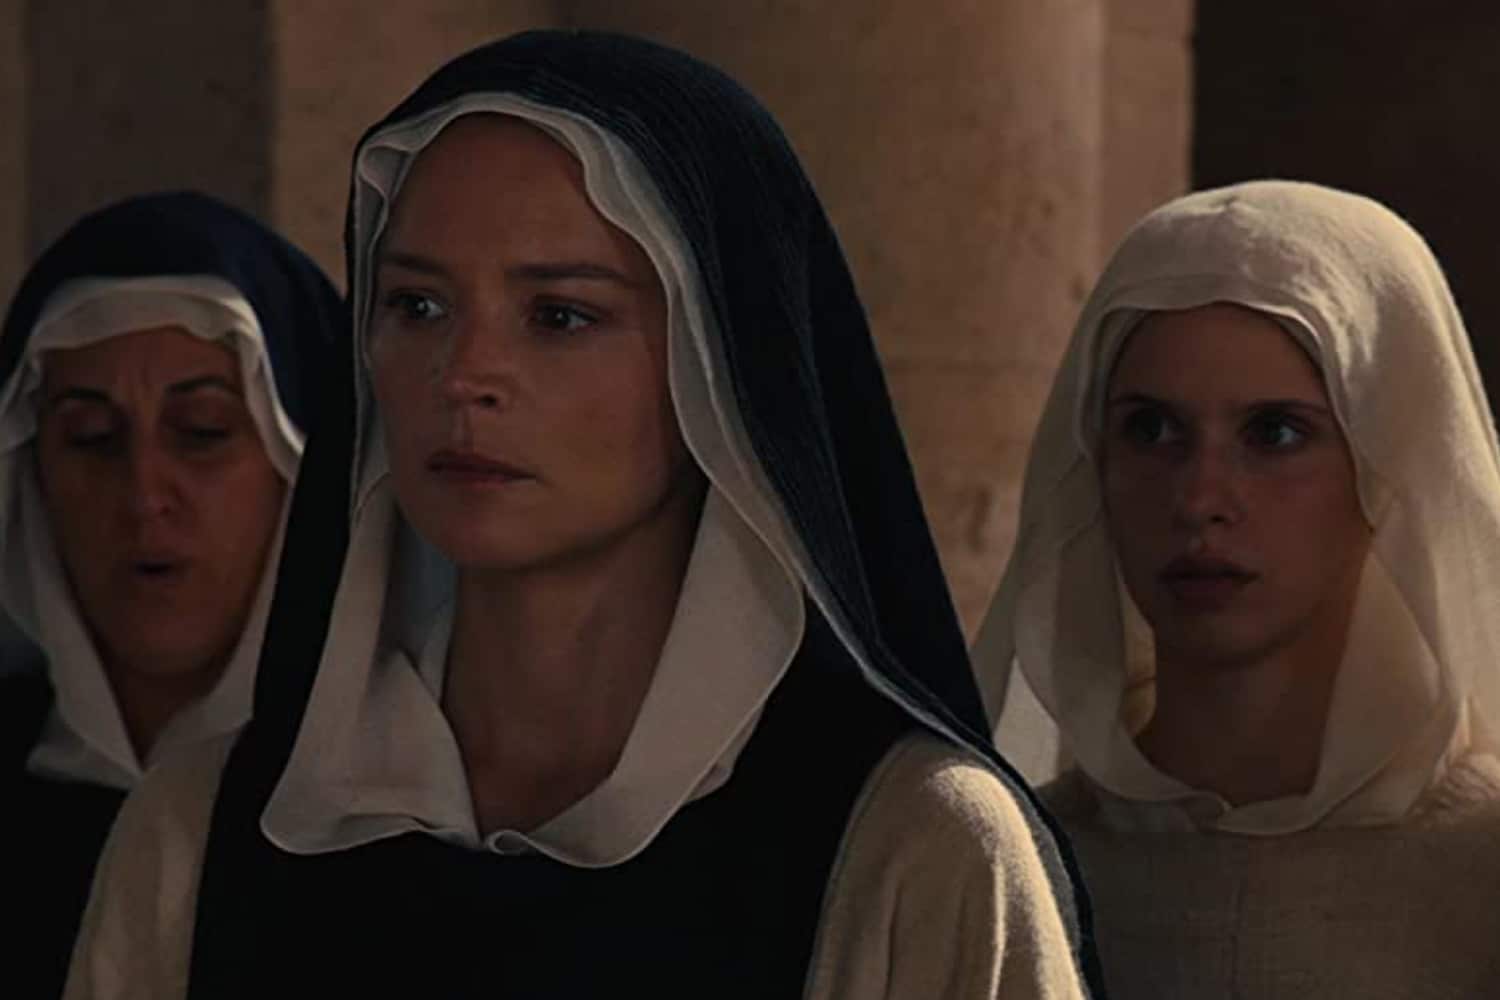 Nun Schoolgirl Lesbian Sex - 14 arthouse films we're watching in 2023